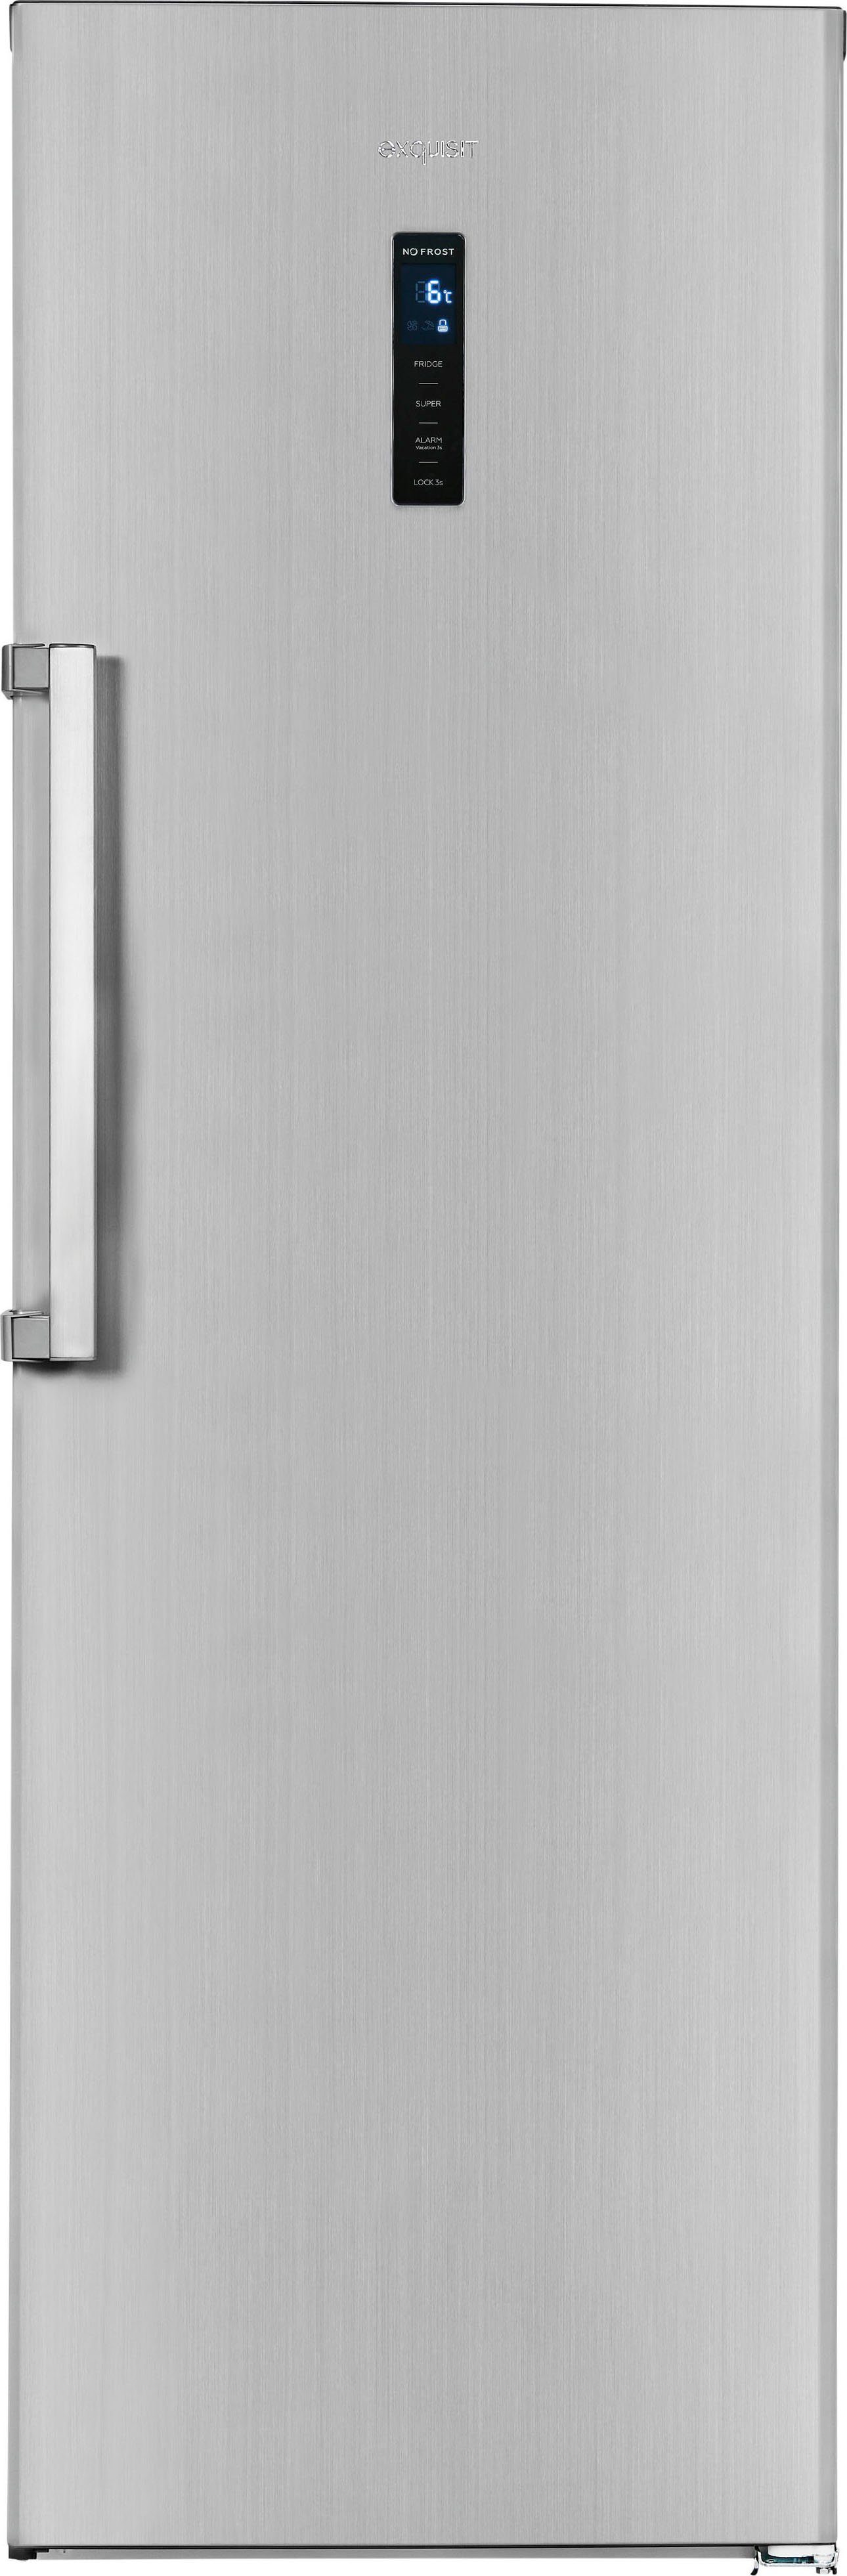 breit Vollraumkühlschrank exquisit cm cm hoch, KS360-V-HE-040D, Edelstahl 185 60